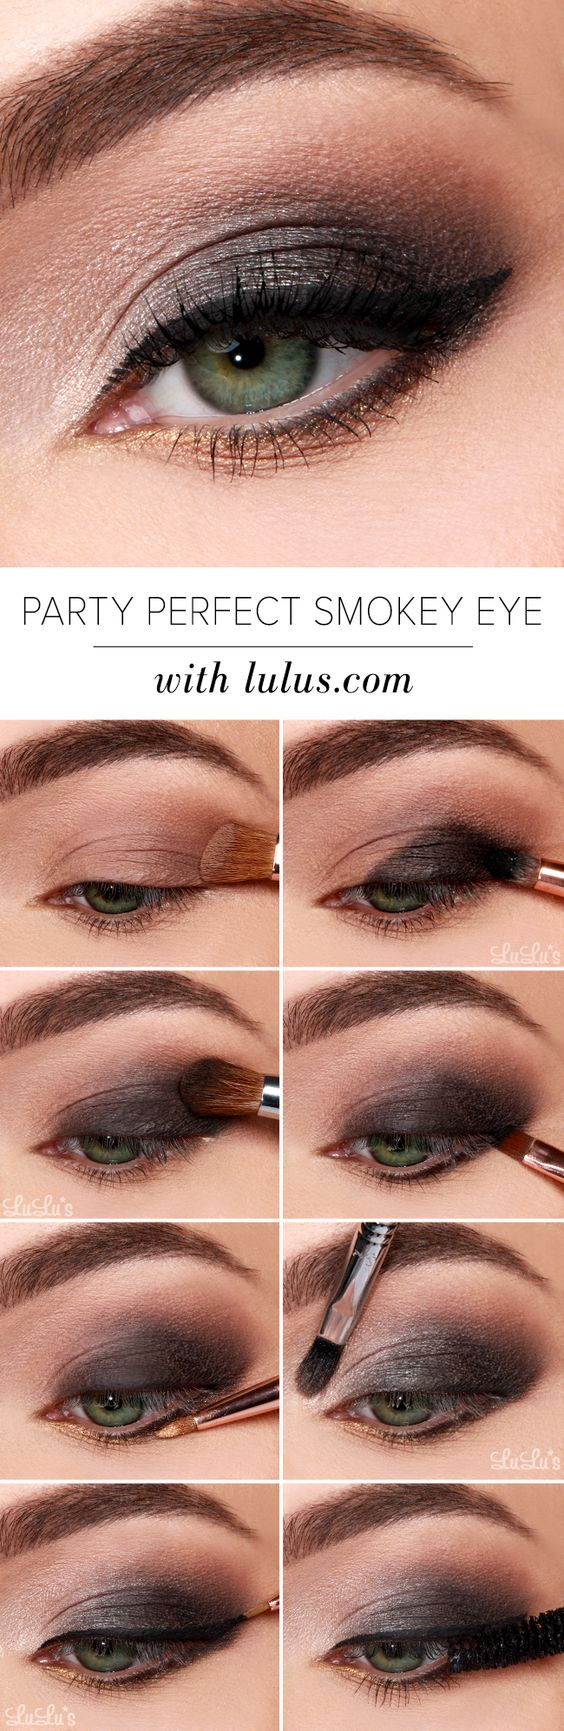 Dark Shadow Eye Makeup 40 Hottest Smokey Eye Makeup Ideas 2019 Smokey Eye Tutorials For